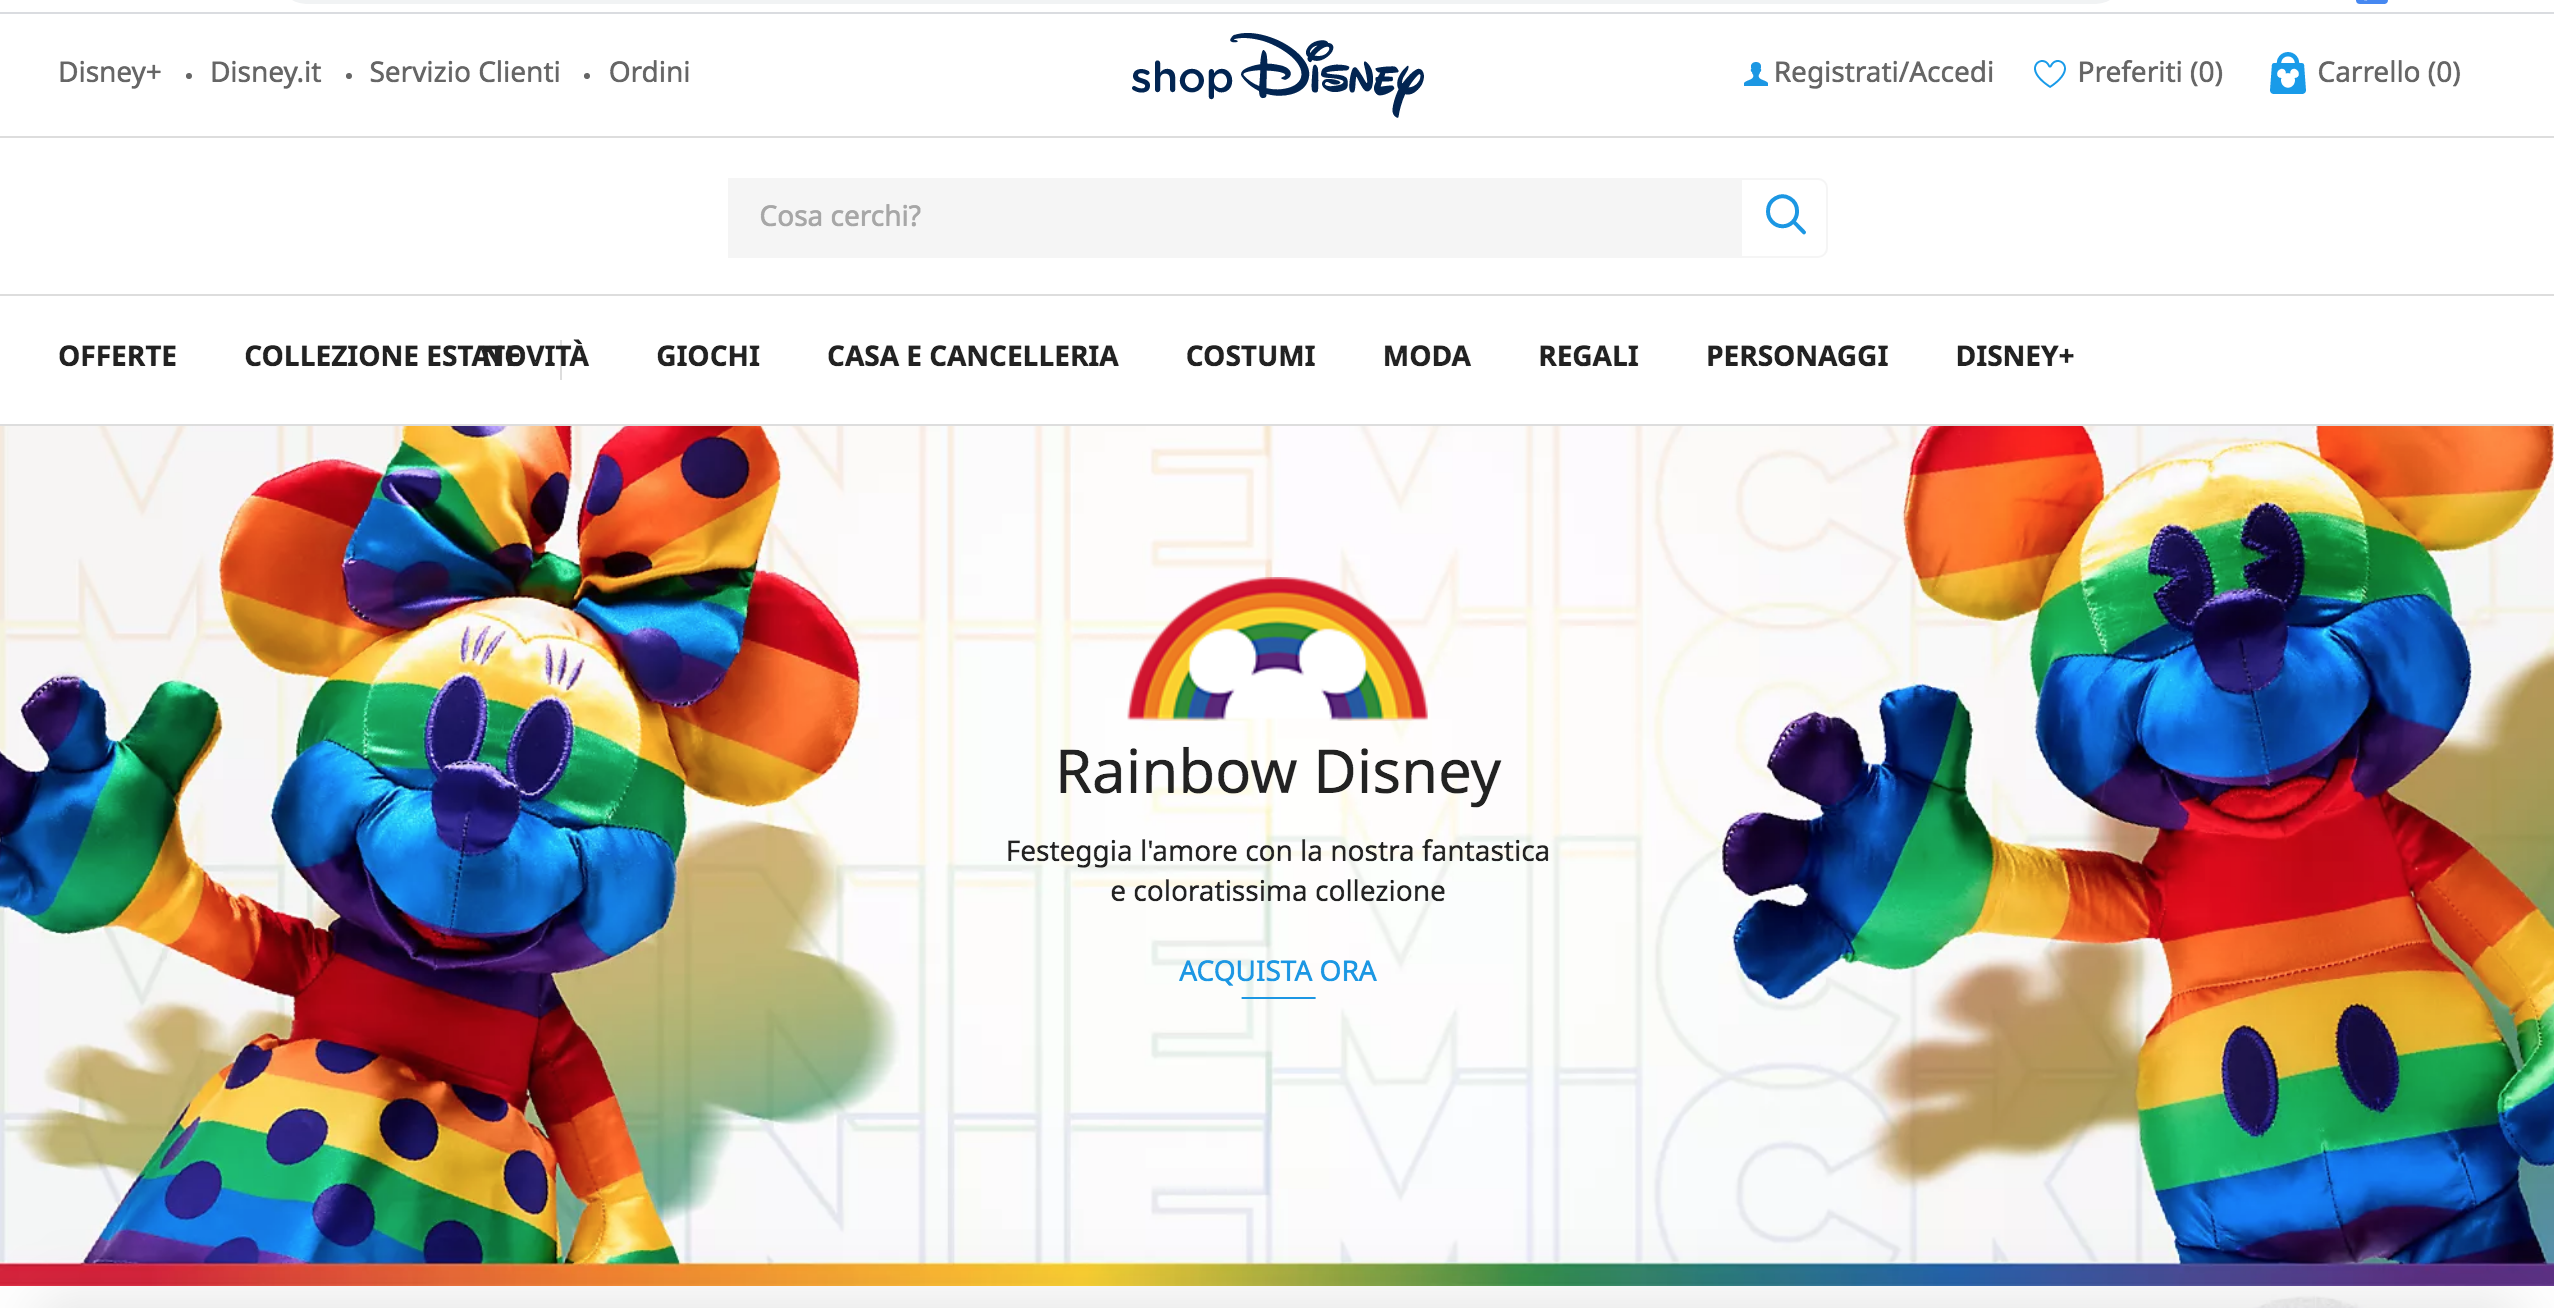 La Disney e i gadget arcobaleno: ennesimo ossequio alla propaganda LGBT 1